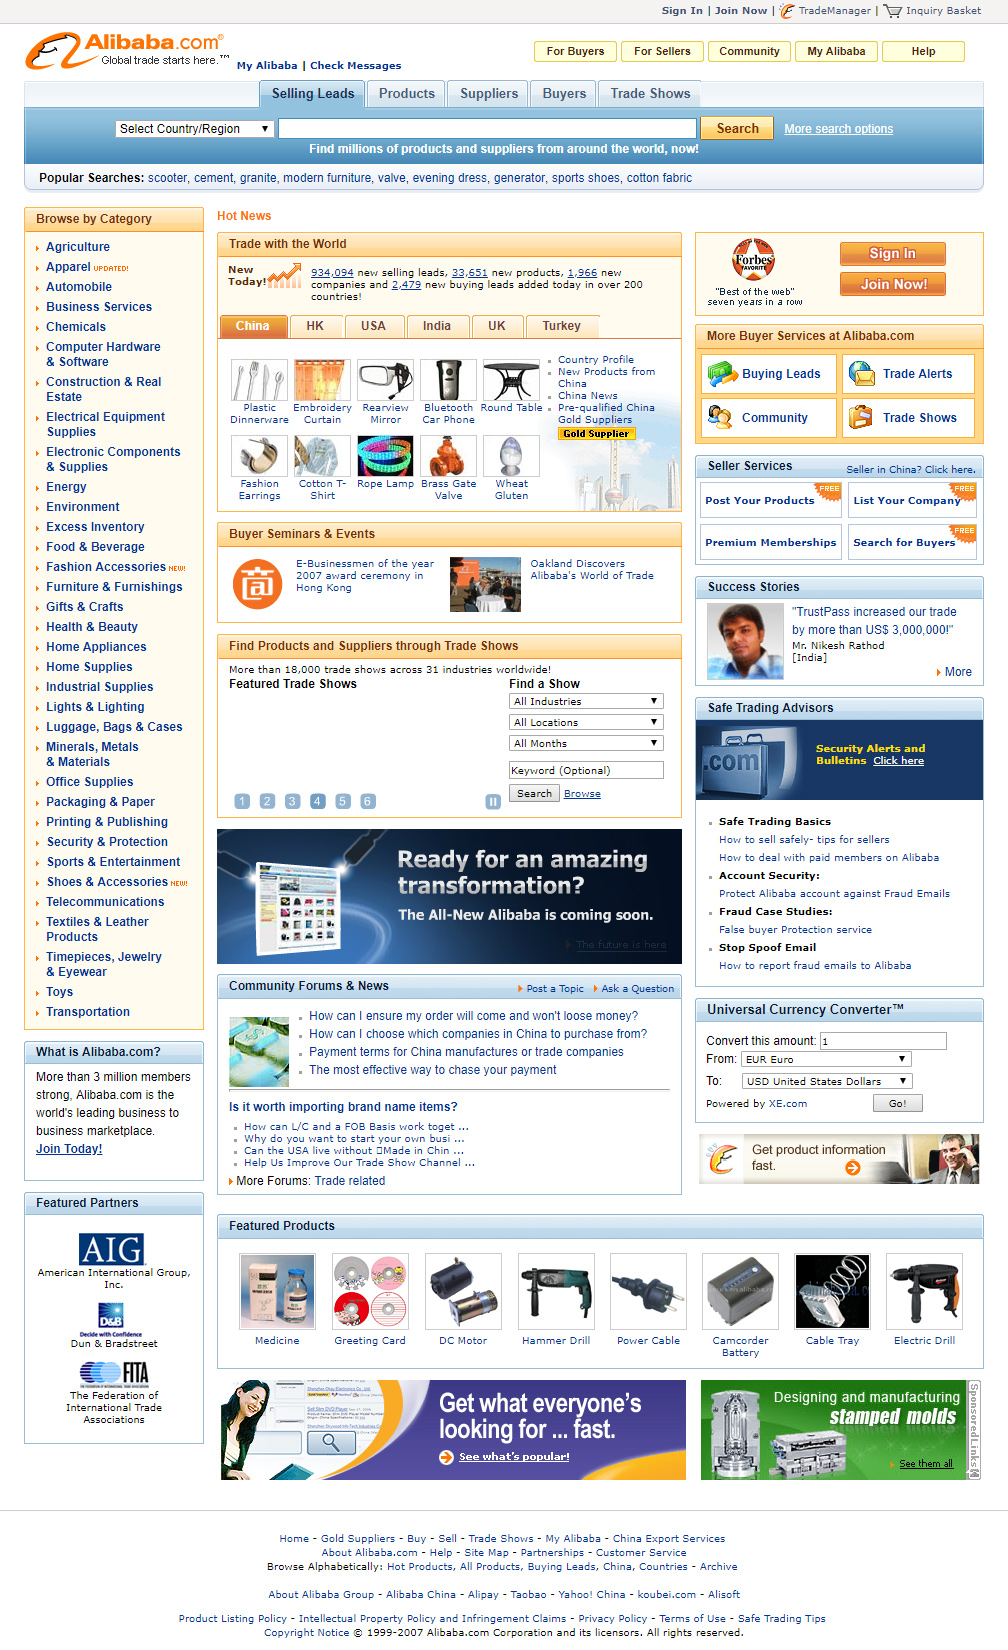 Alibaba In 2007 Timeline Web Design Museum